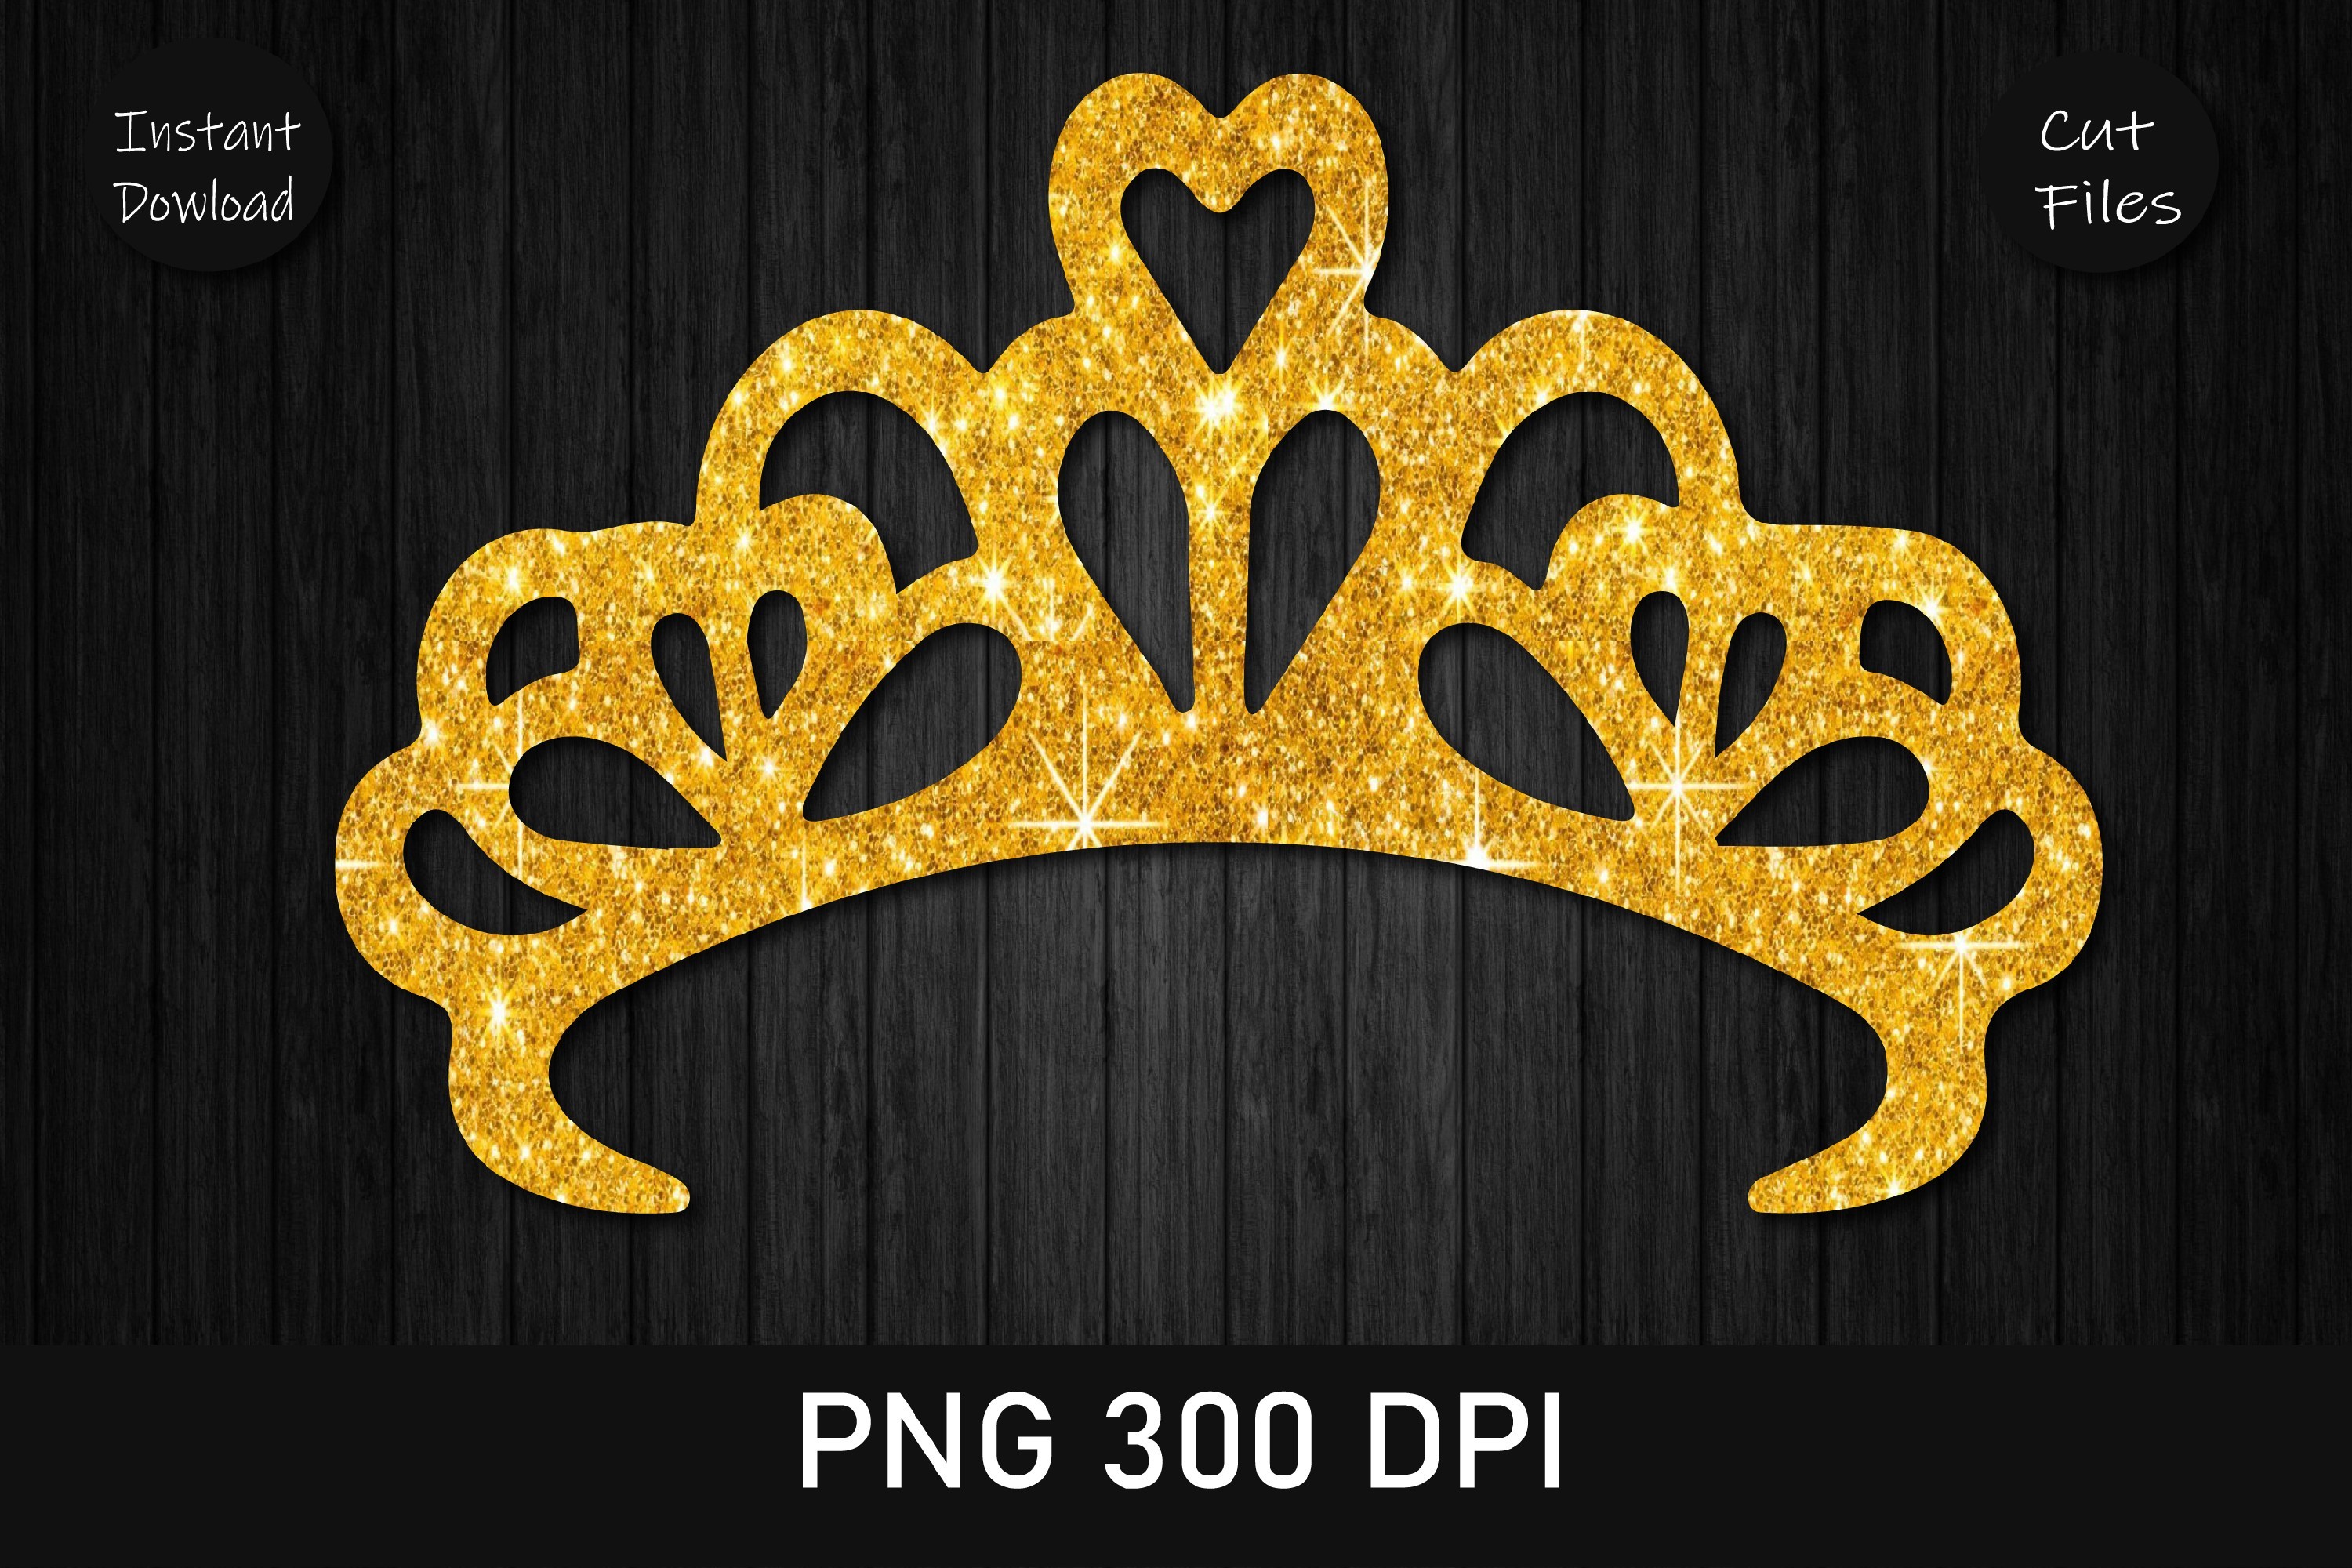 yellow princess crown